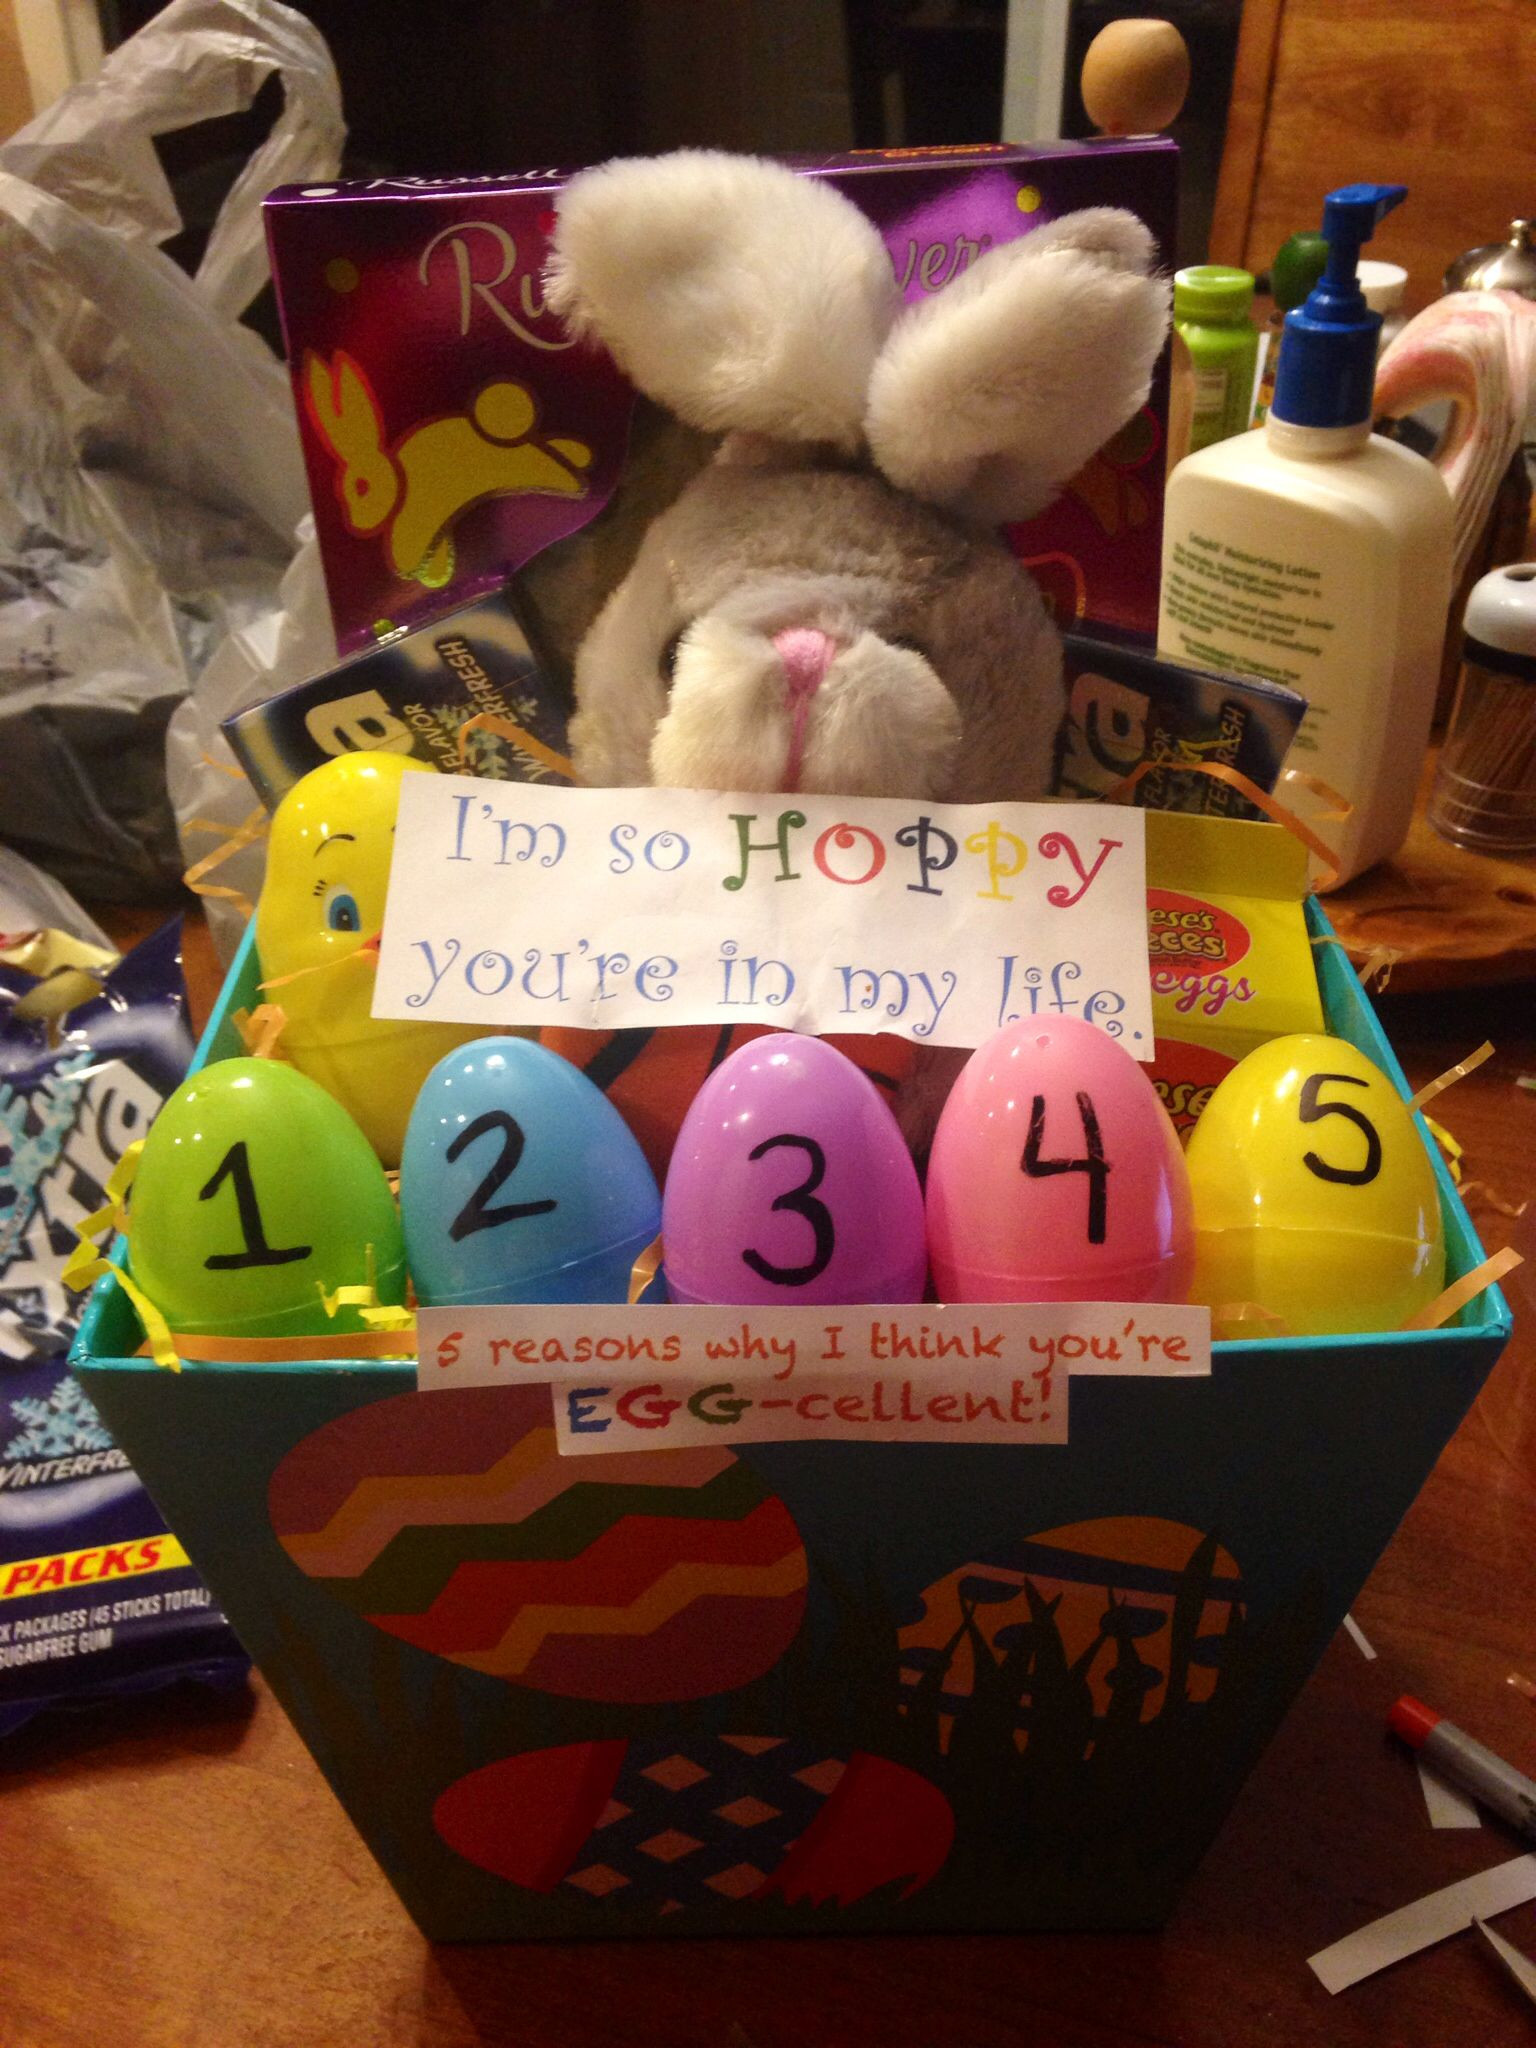 Easter Basket Ideas For Girlfriend
 Easter Basket for girlfriend boyfriend "I m so HOPPY you